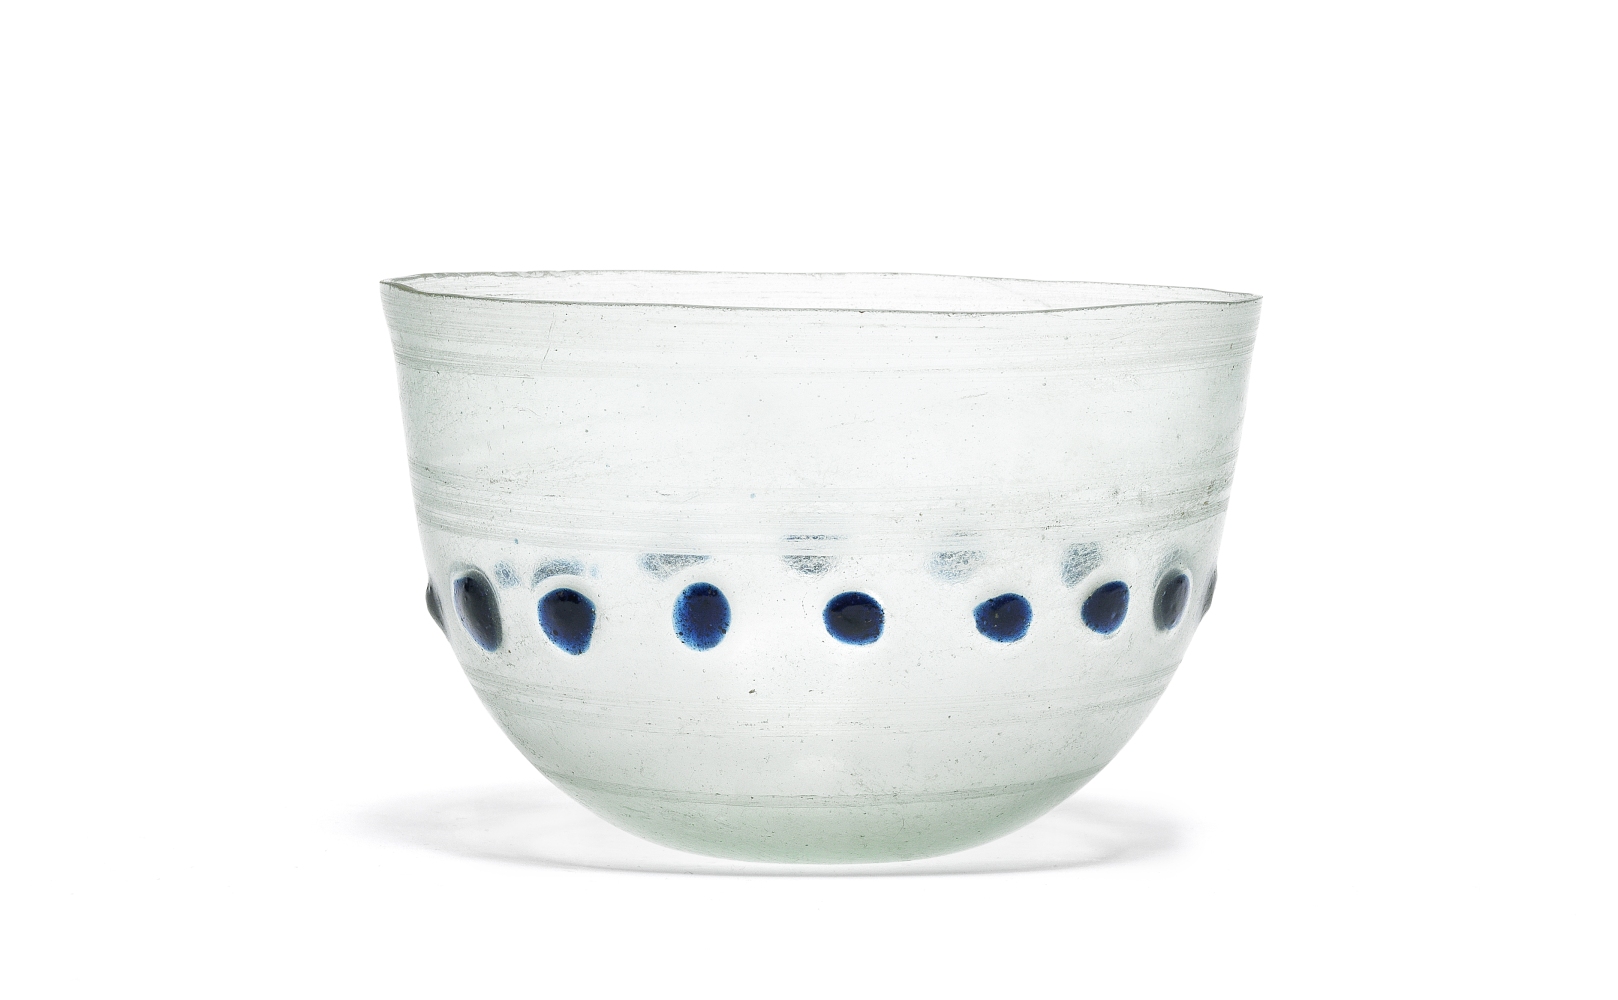 A Roman pale green glass hemispherical bowl